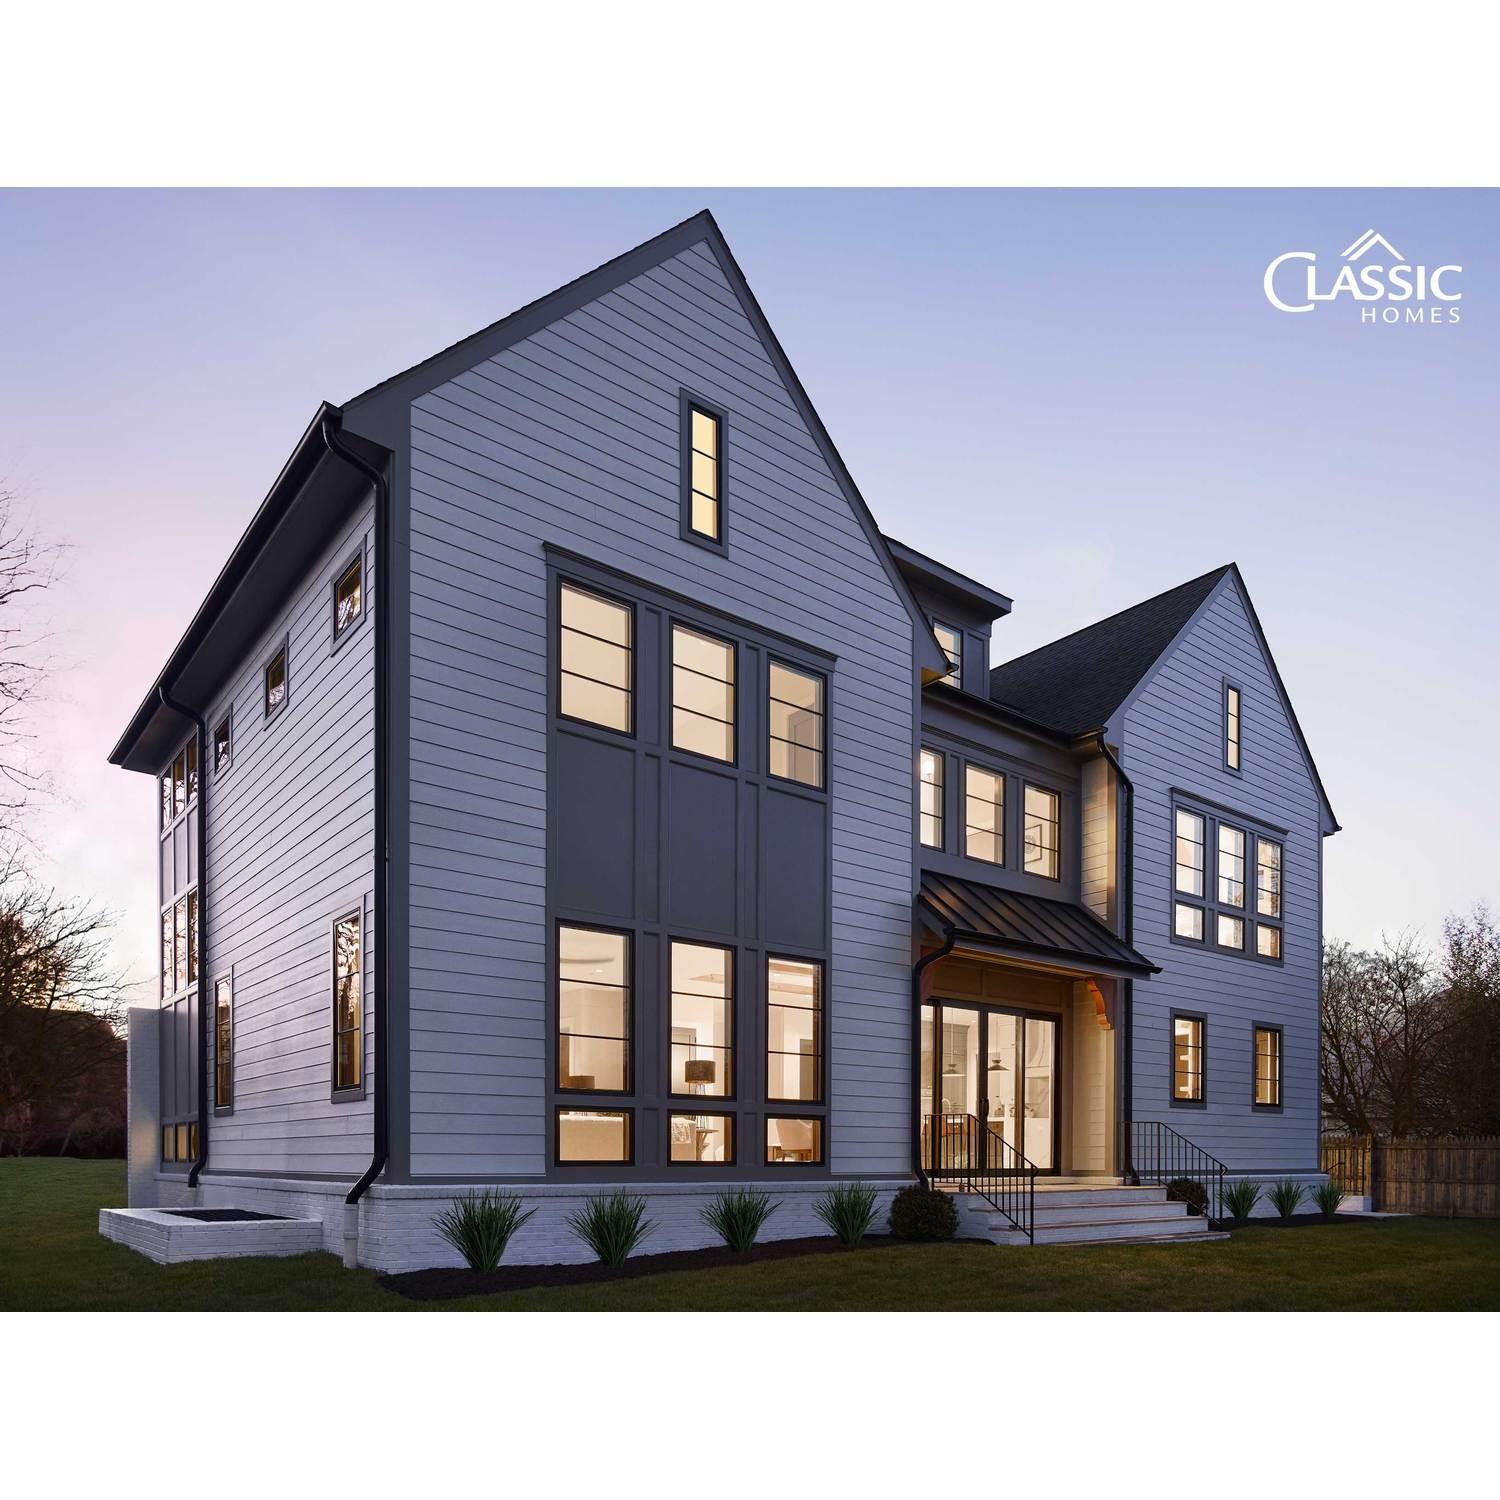 1. Classic Homes Of Maryland - Custom Home Builder (B